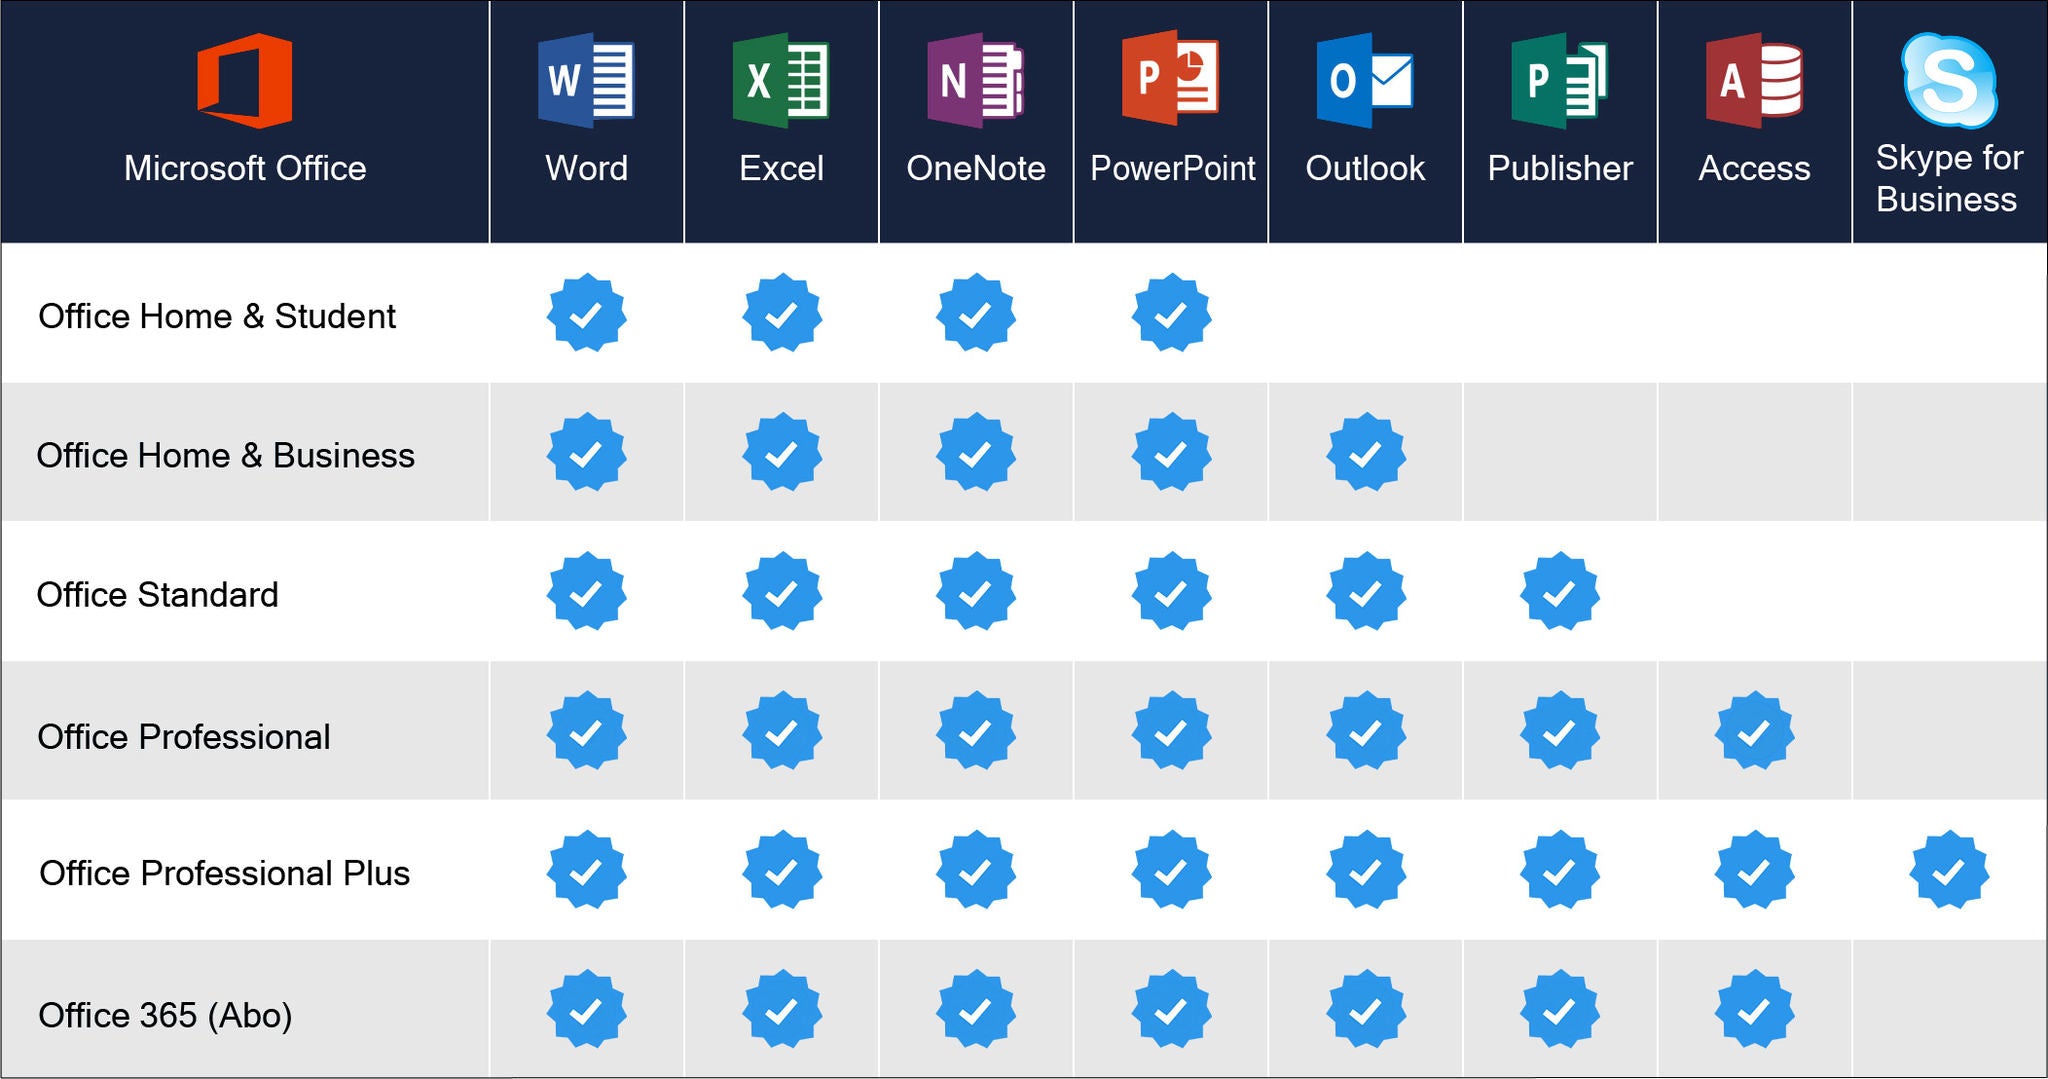 Microsoft Office 2019 Standard | Windows